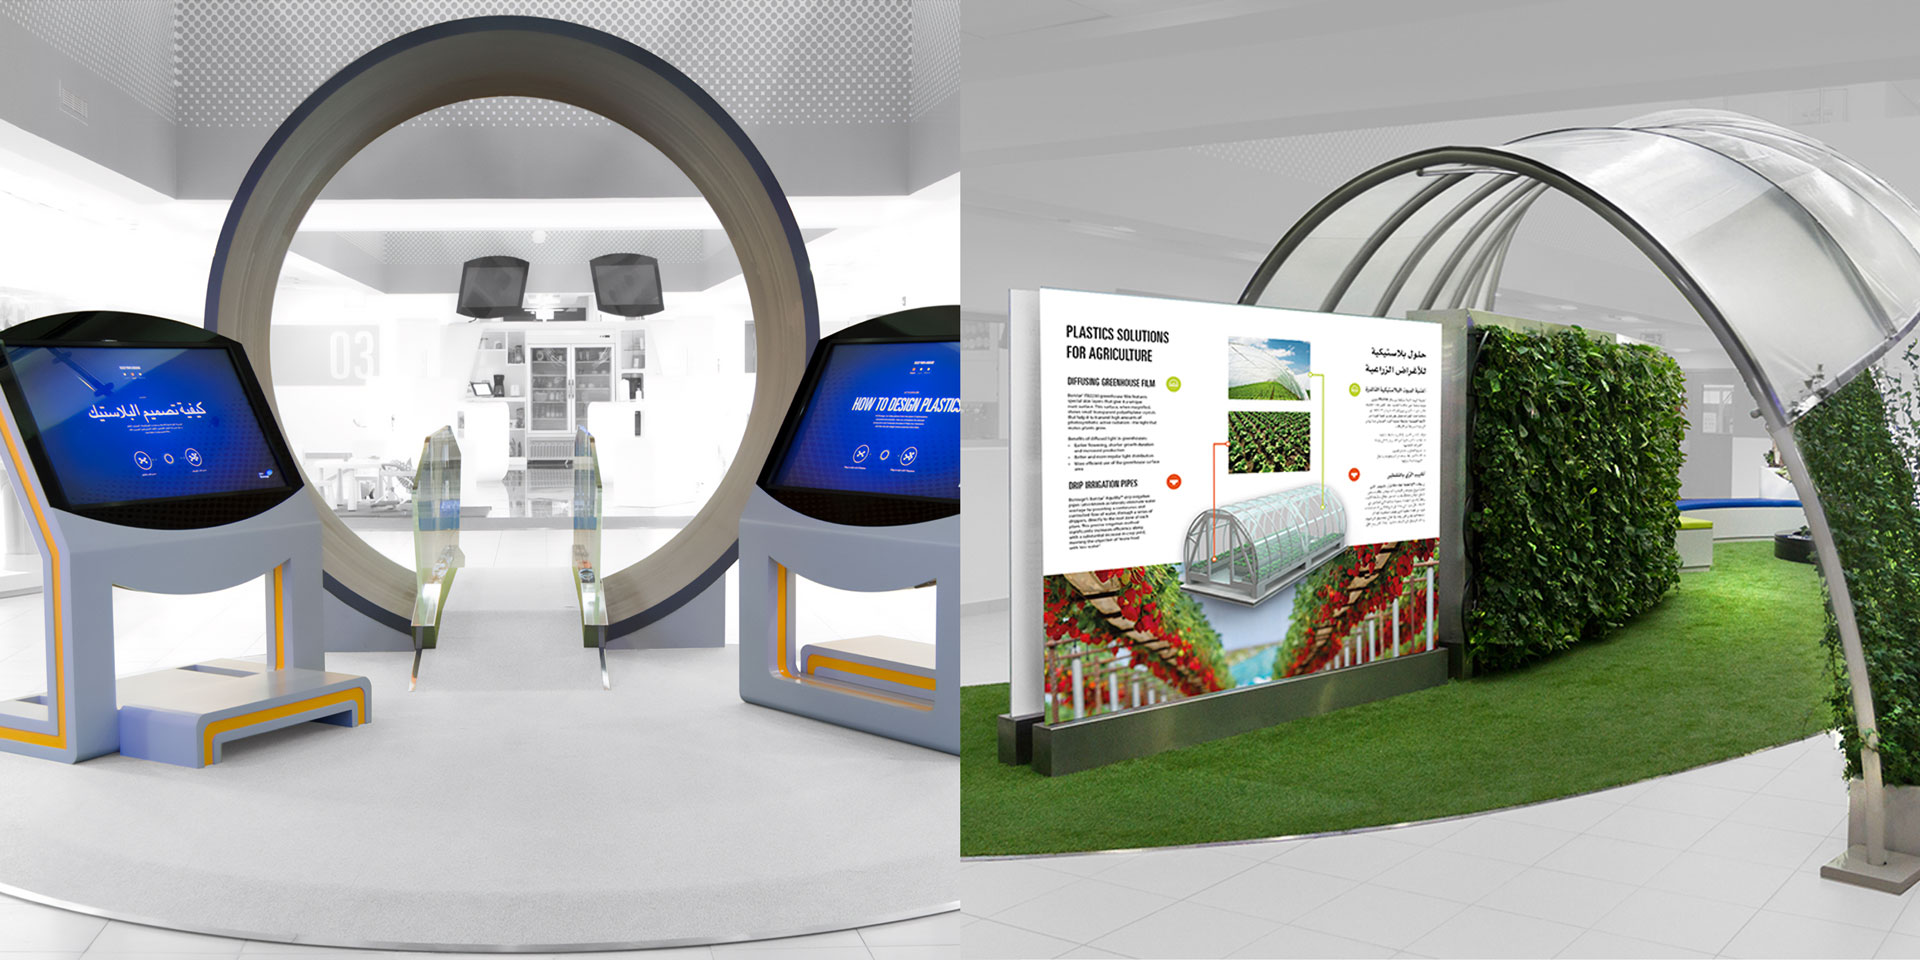 2 views of the Kiosk or "the Innovation center", developed for Borouge